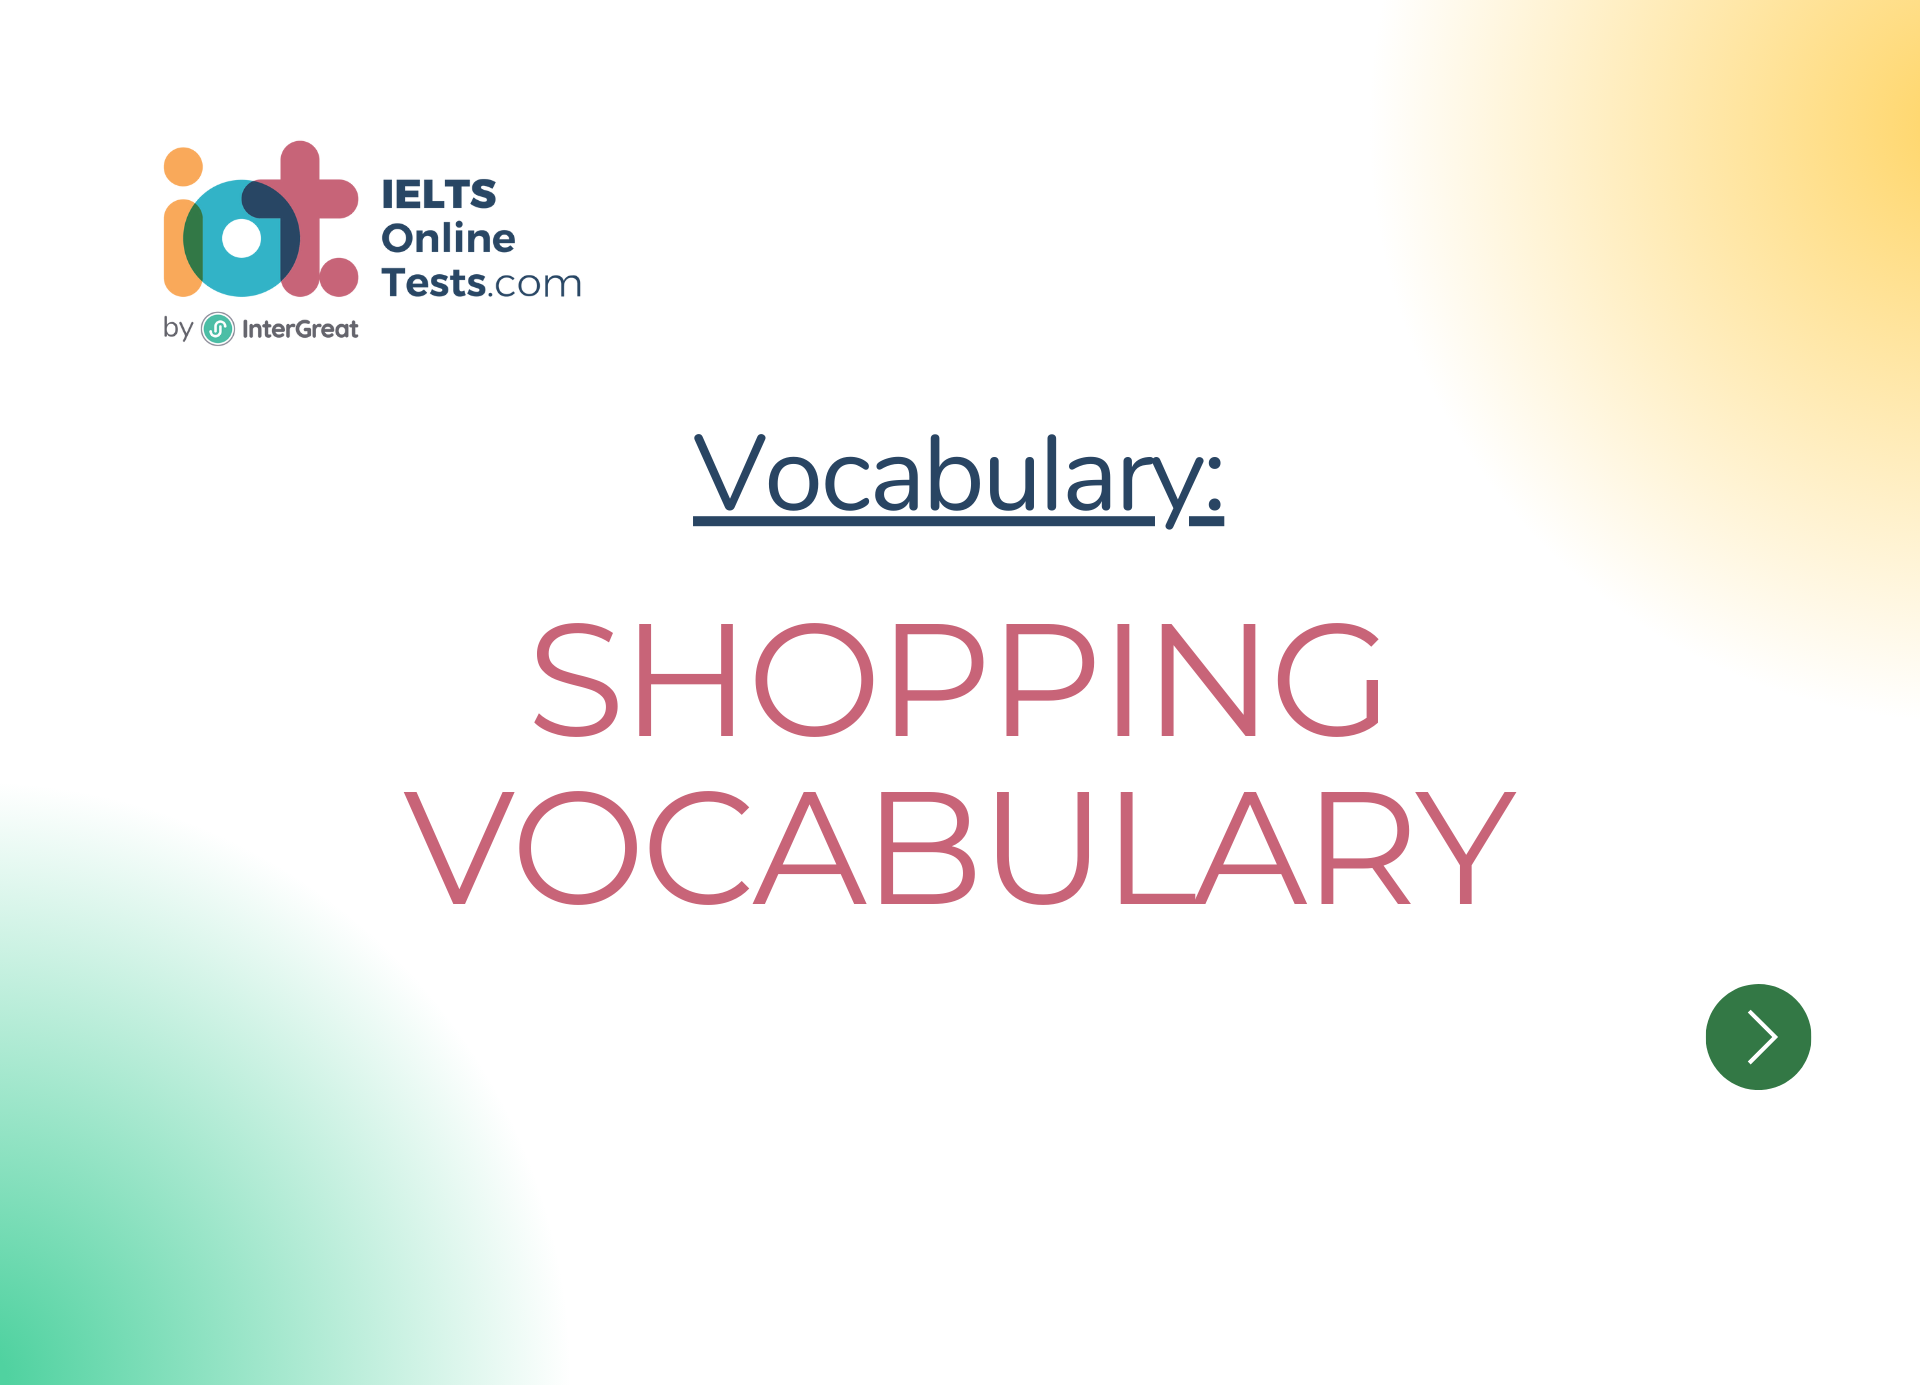 Shopping vocabulary